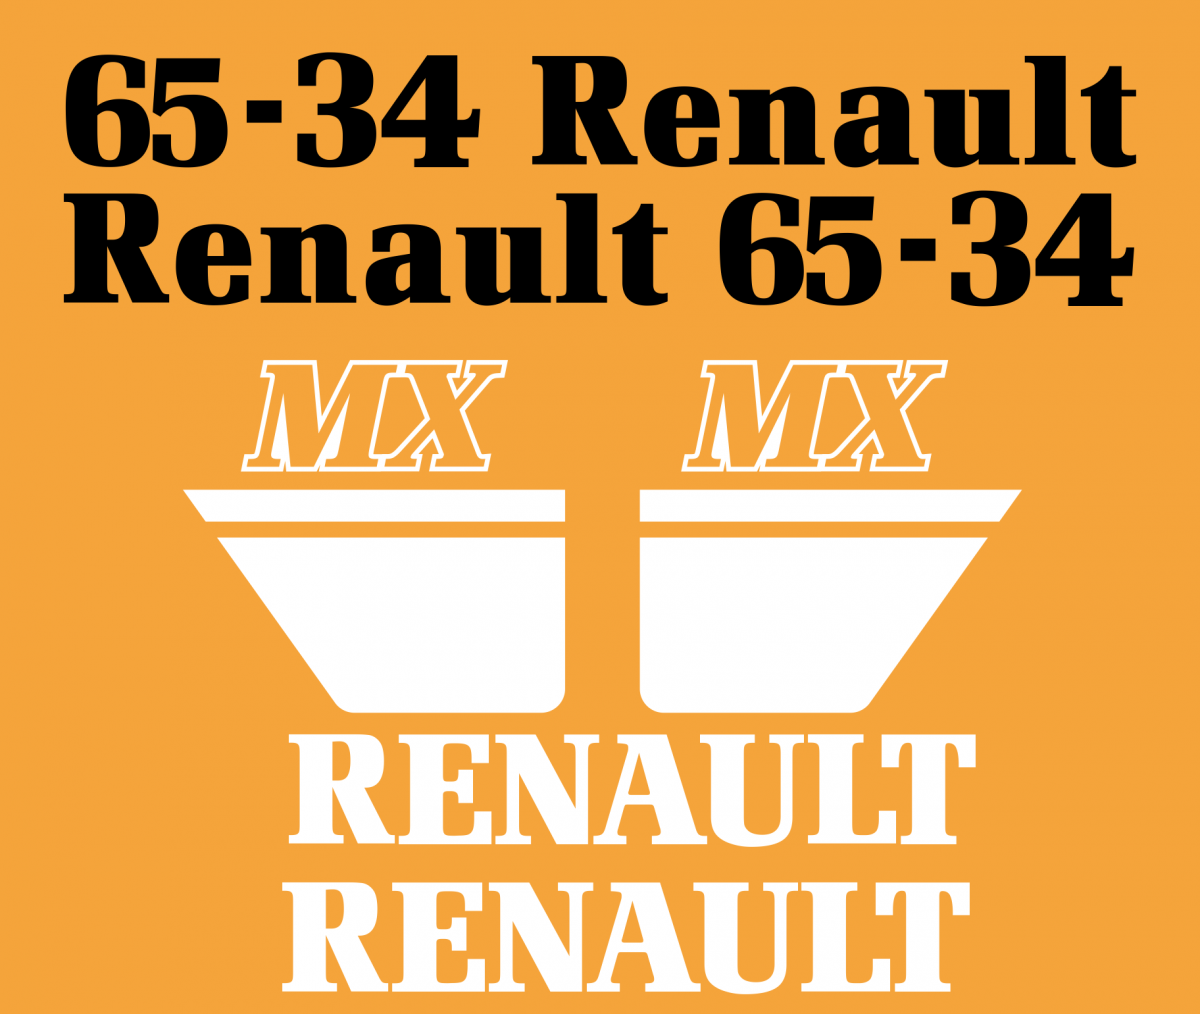 stickers RENAULT 65-34 MX